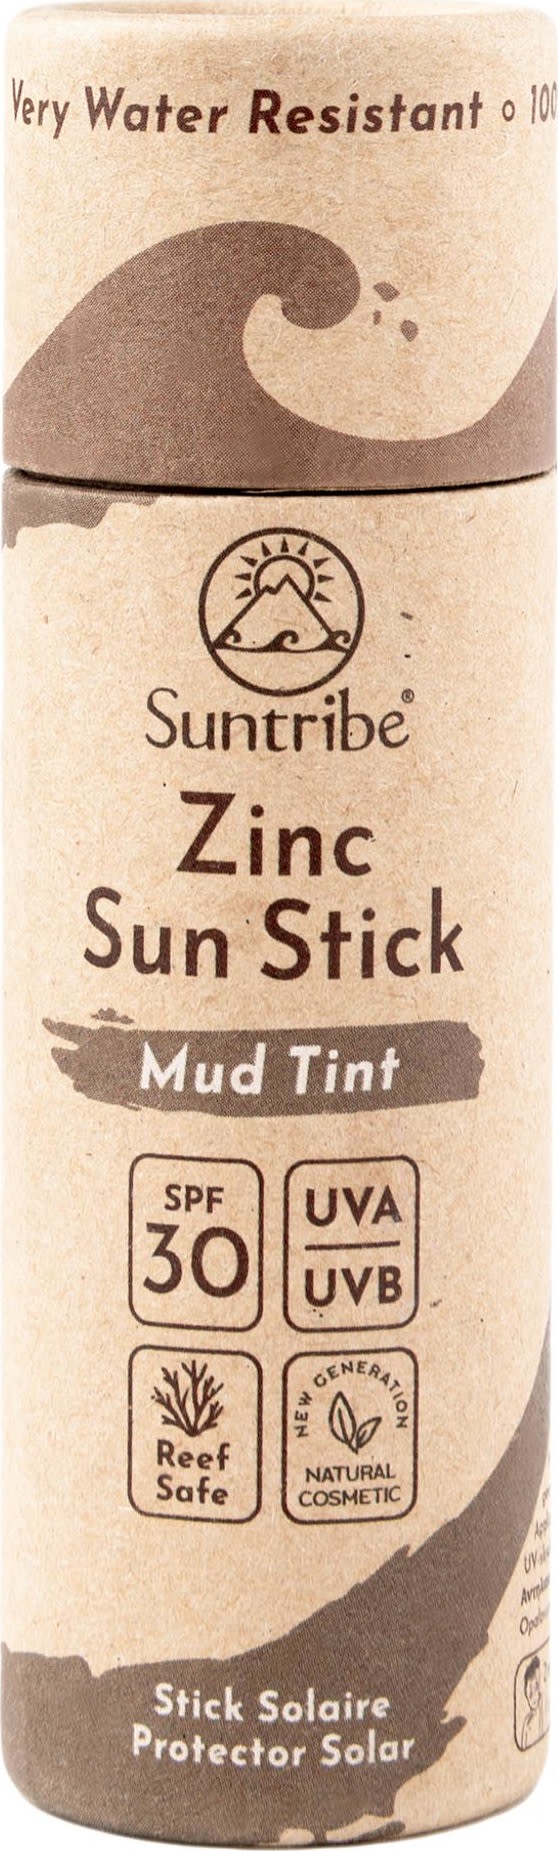 Suntribe Natural Mineral Zinc Sun Stick SPF 30 Mud Tint